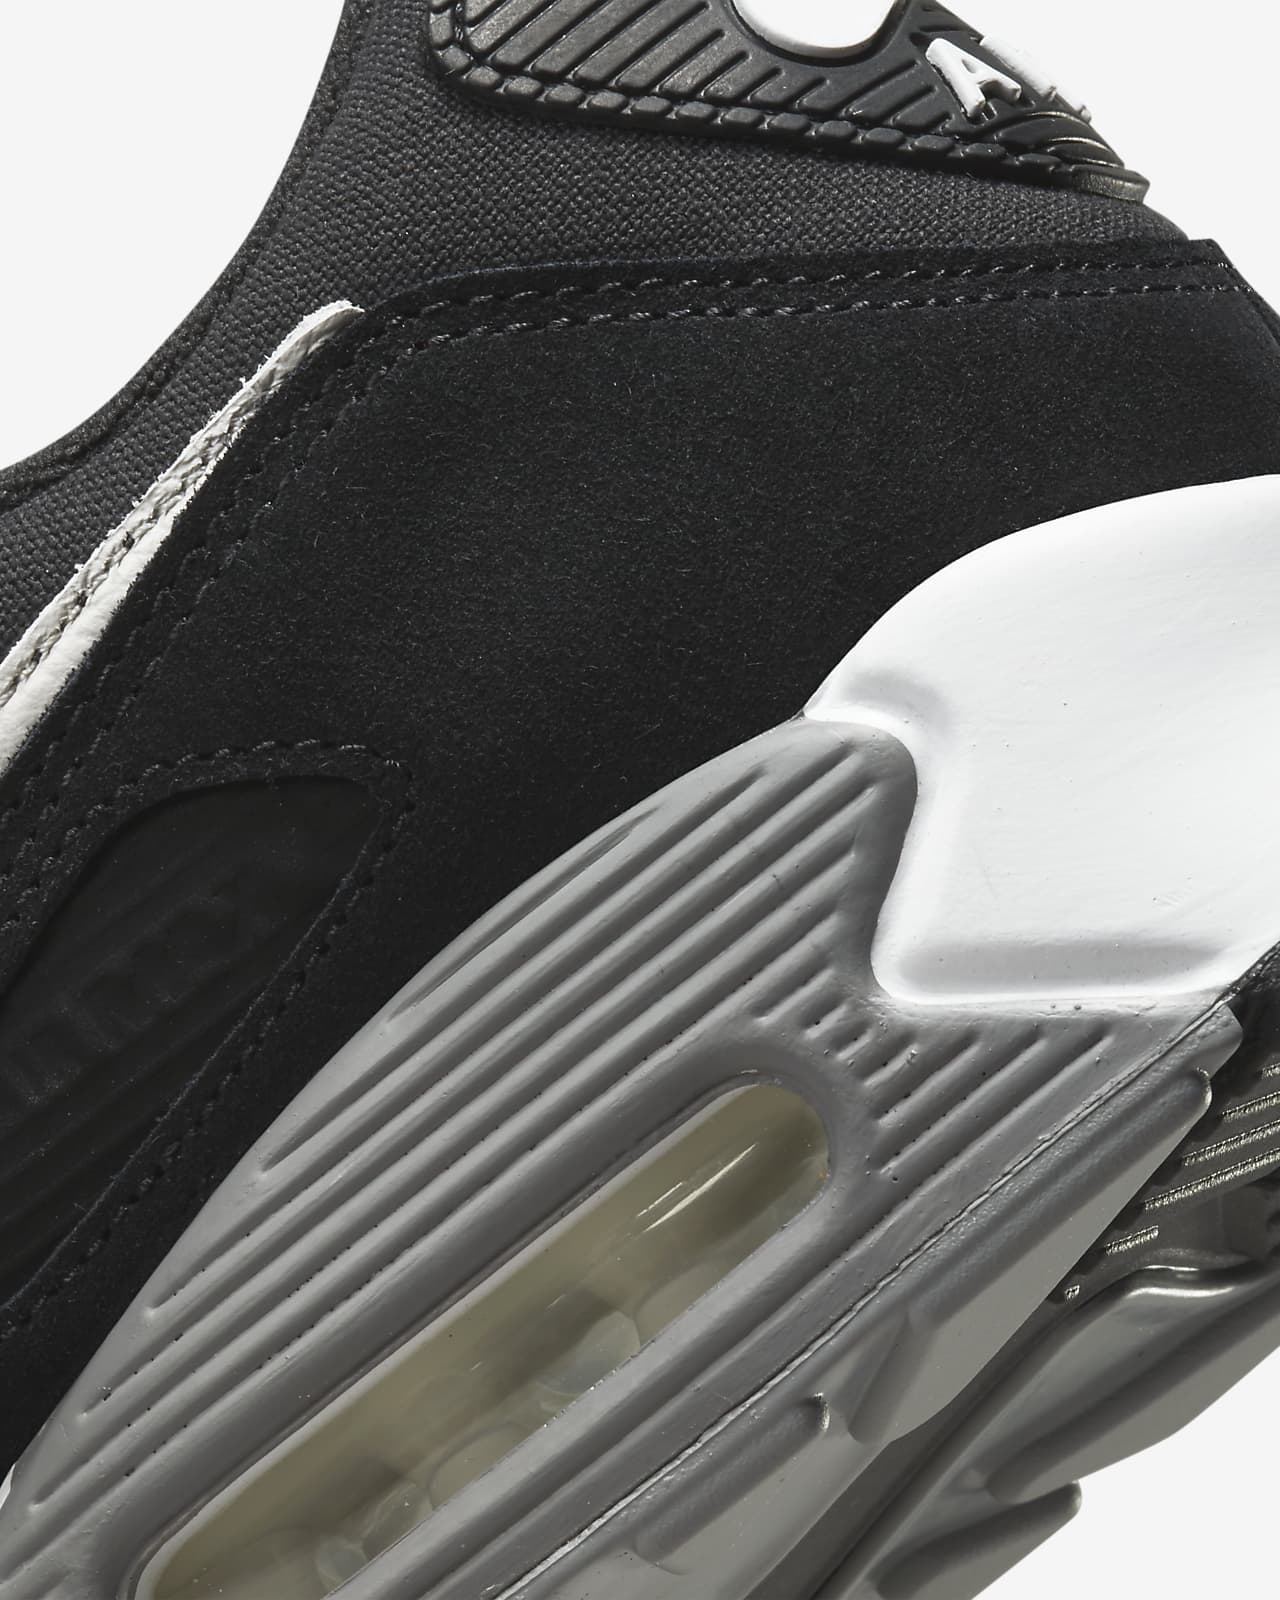 Nike Air Max 90 Premium Men's Shoes عطر بوس نسائي